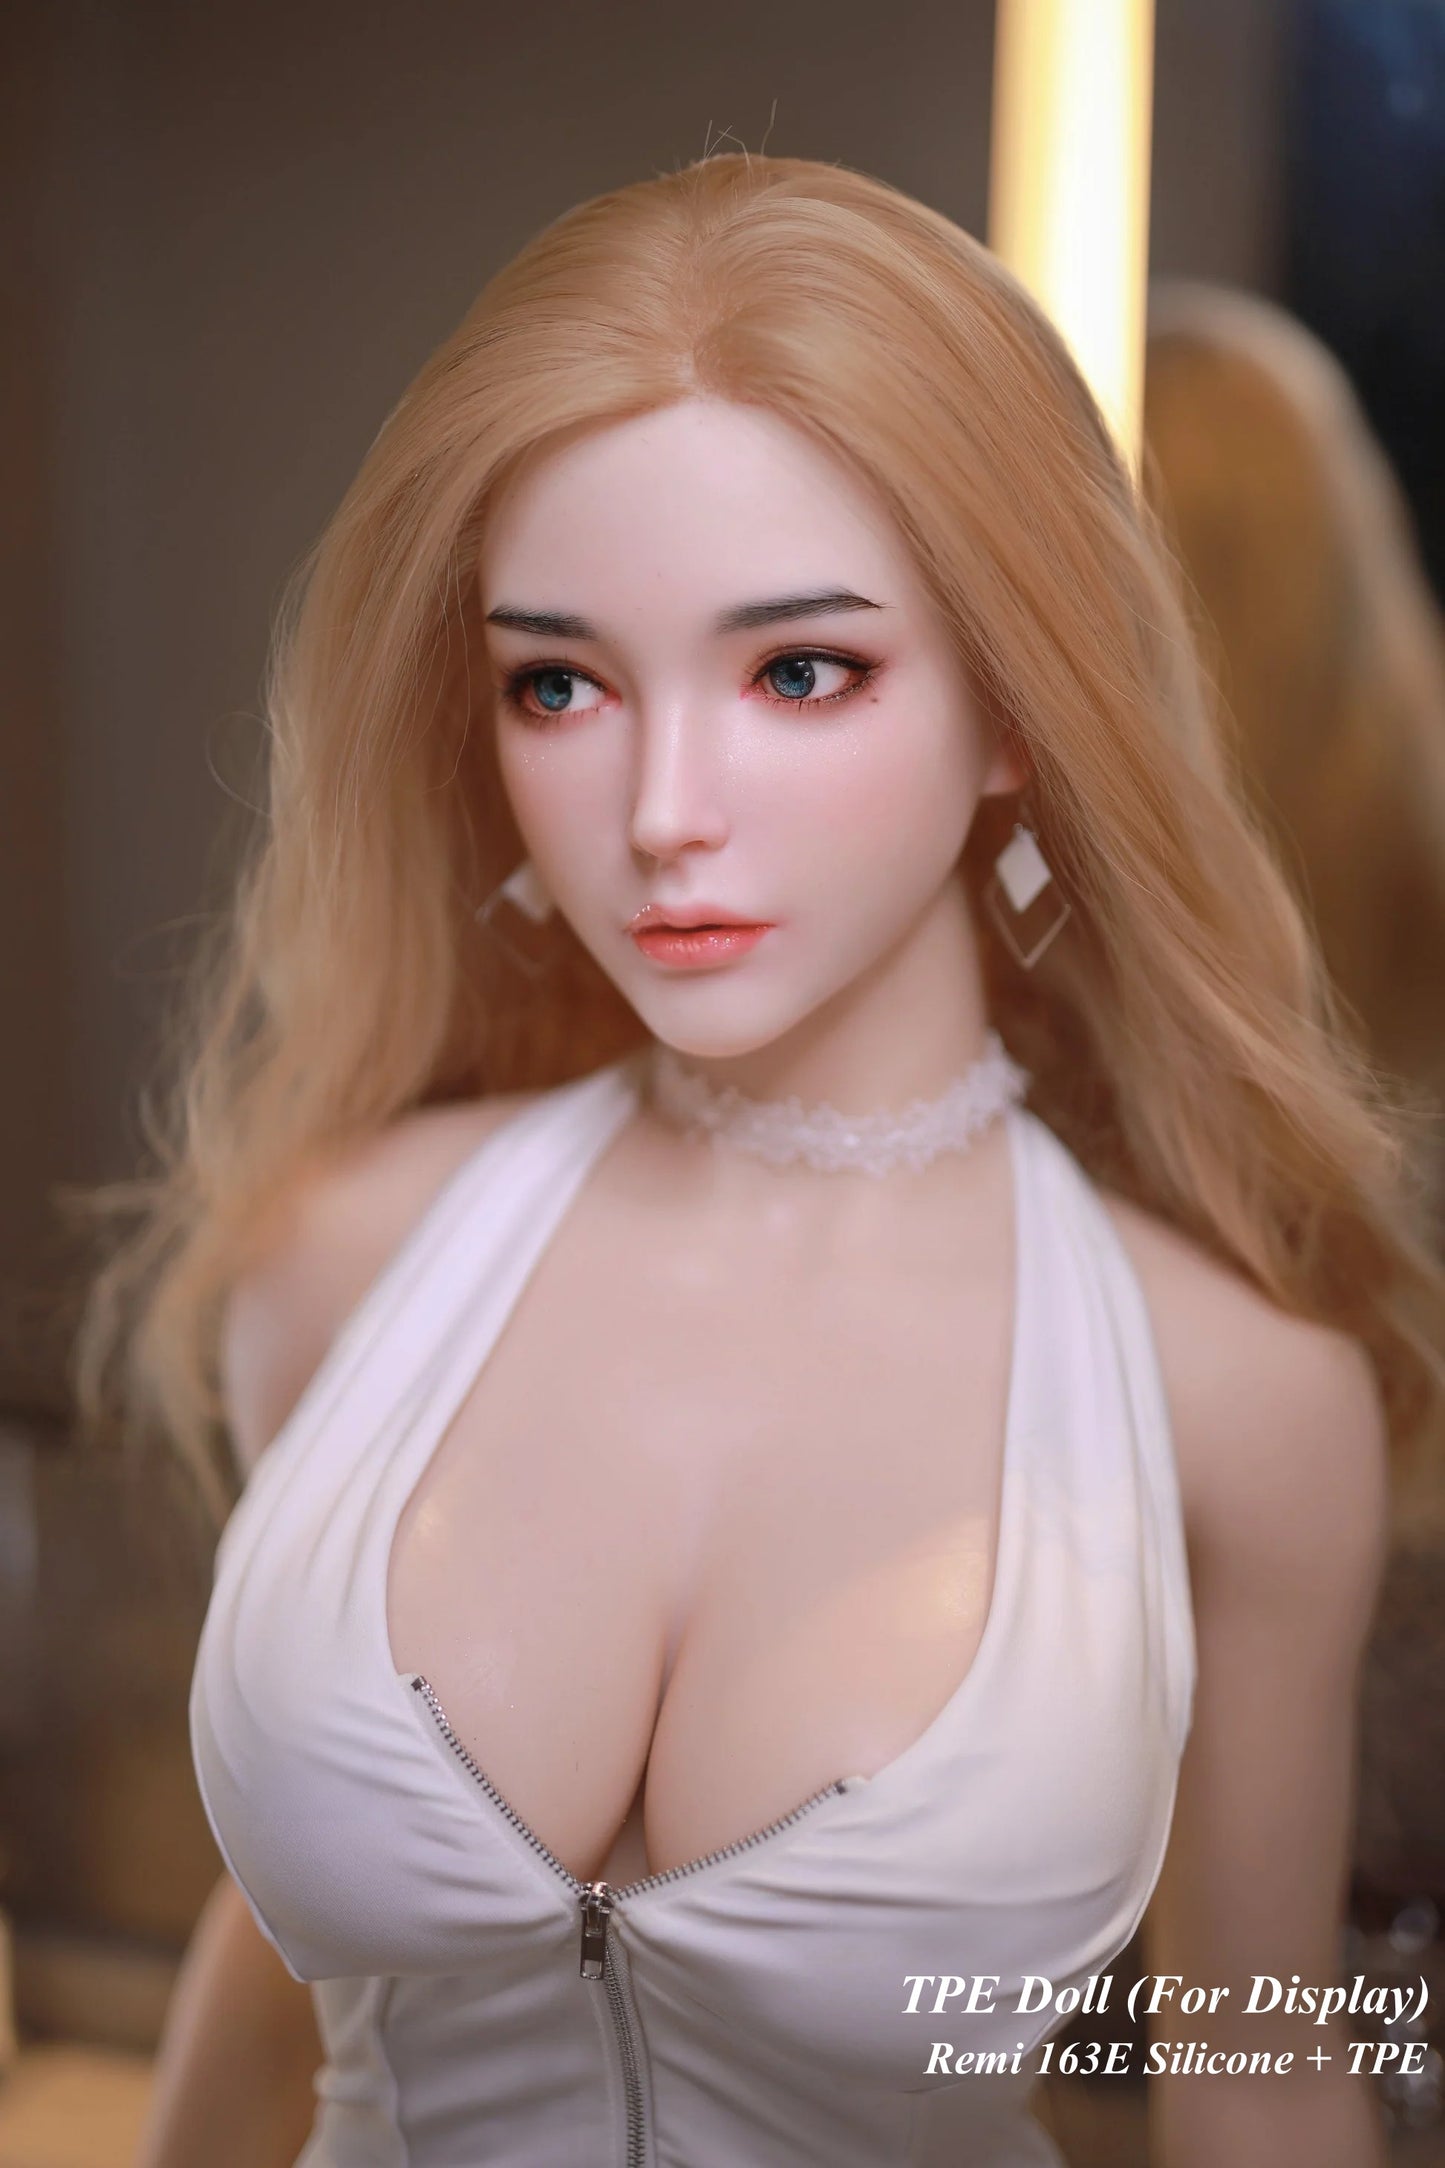 JYDOLL Hybrid Doll Life-like Fashion Display Mannequins for Display [ Silicone Head + TPE Body 163E Remi ]